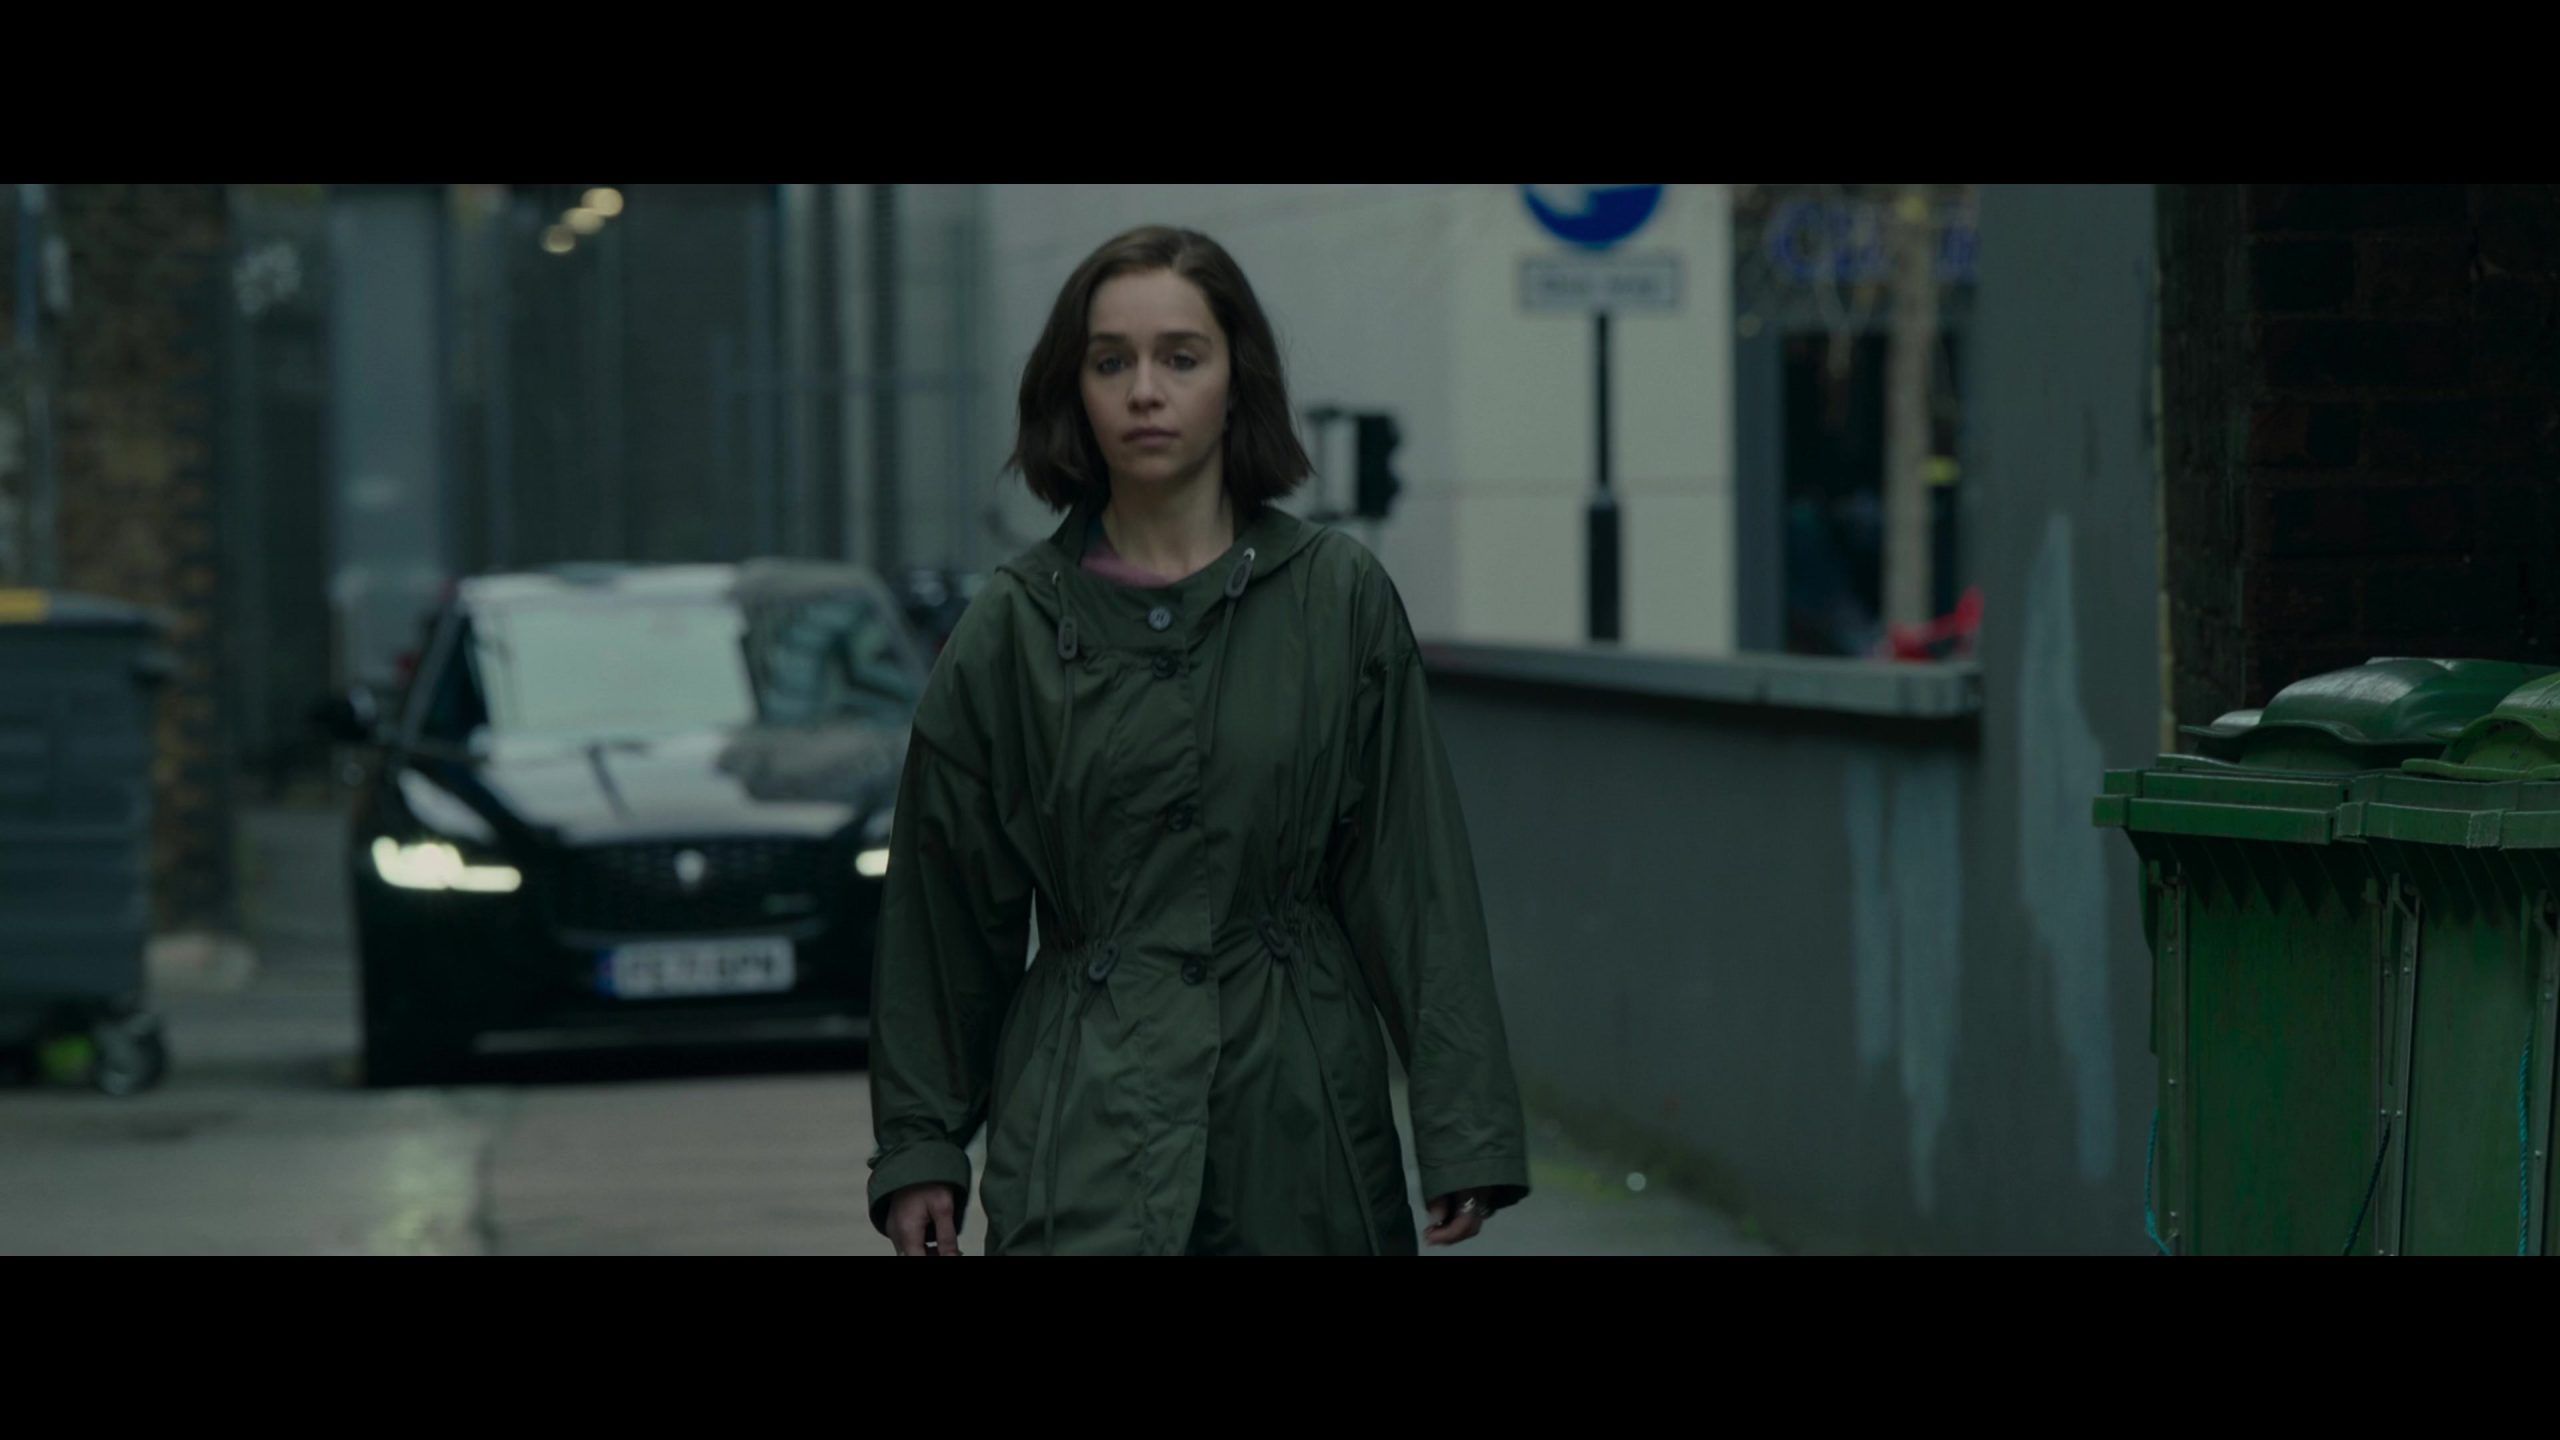 Worn on Secret Invasion TV Show - Green Rain Coat Jacket with Hood Worn by Emilia Clarke as G'iah